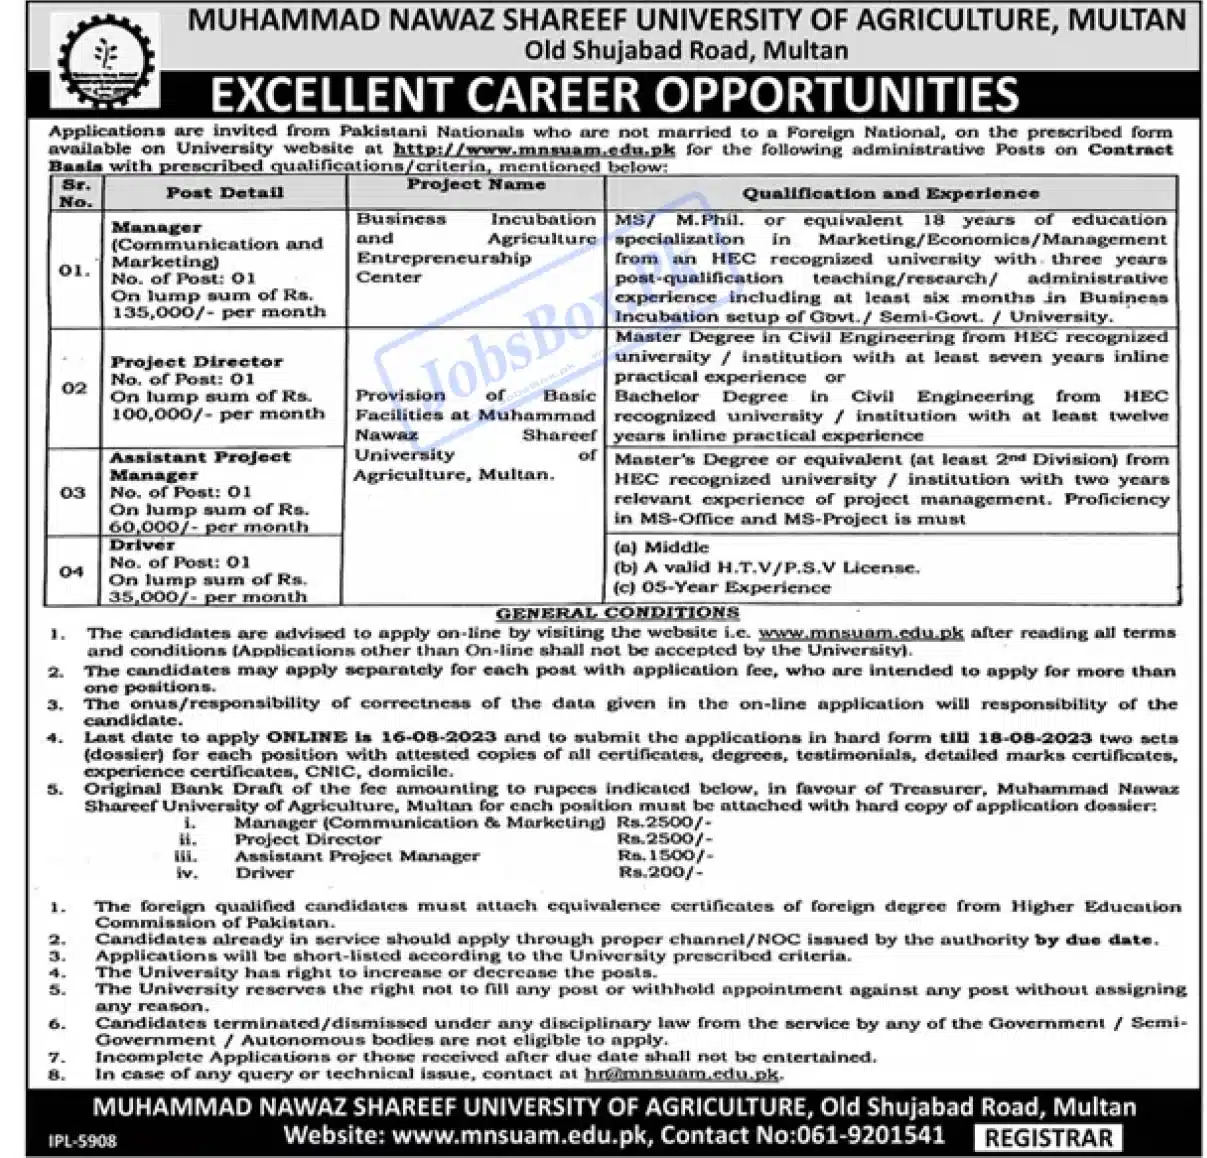 MNS University of Agriculture Multan Jobs 2023